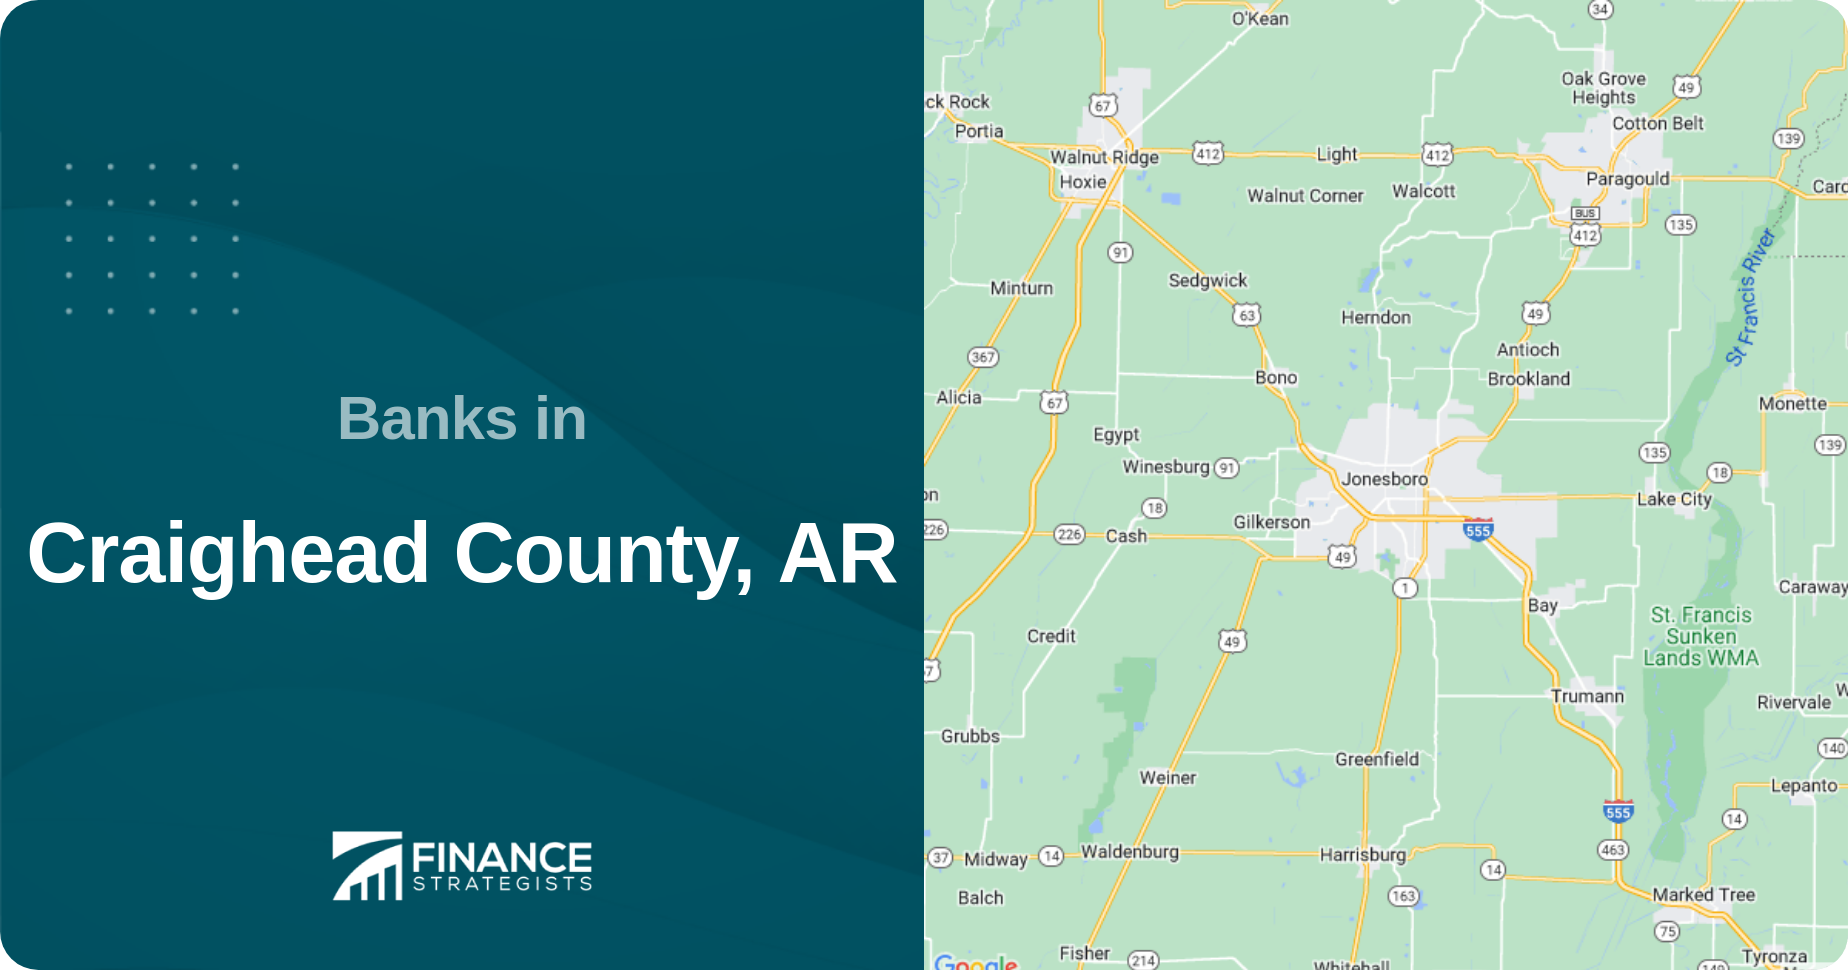 Banks in Craighead County, AR